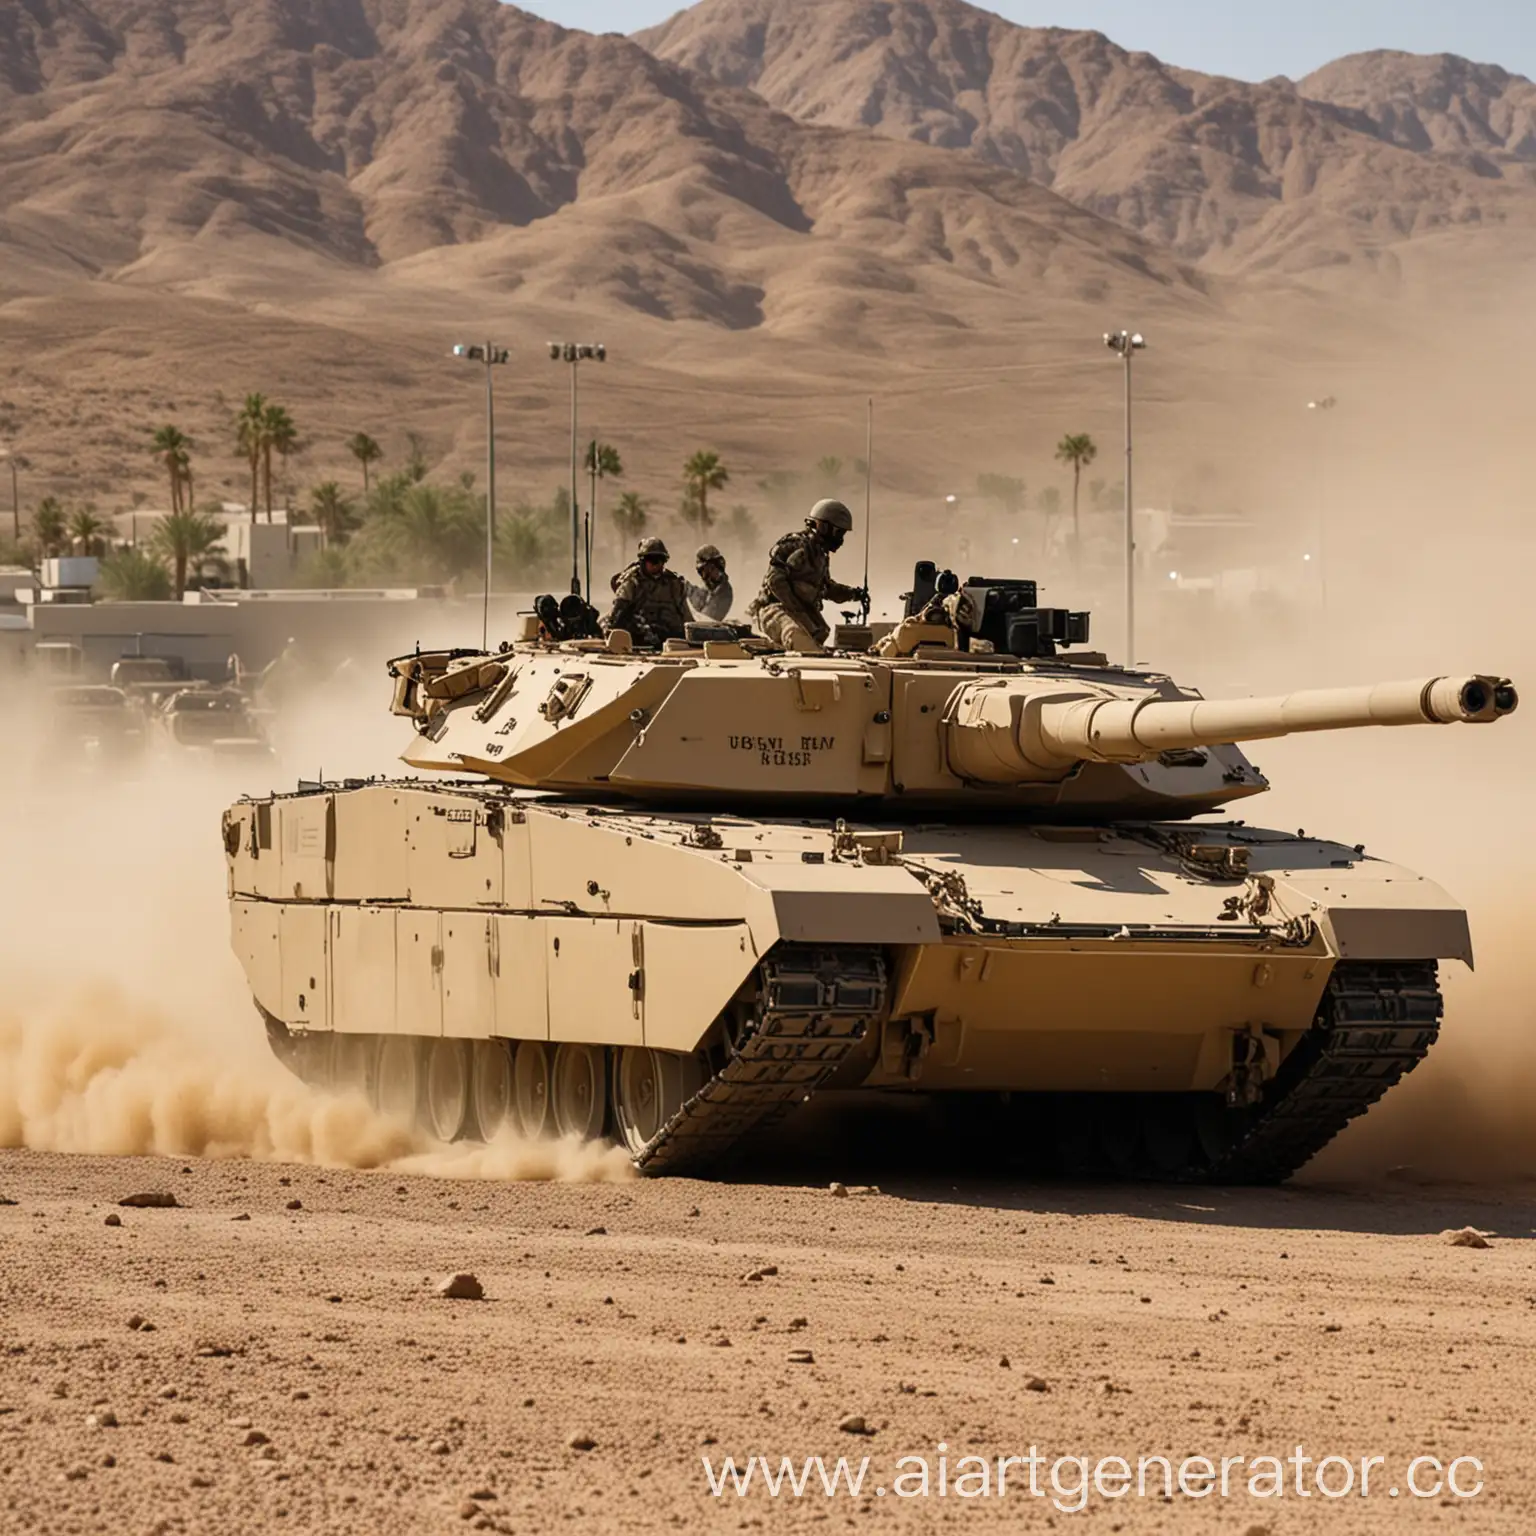 US-Fights-Abrams-Tank-in-Desert-City